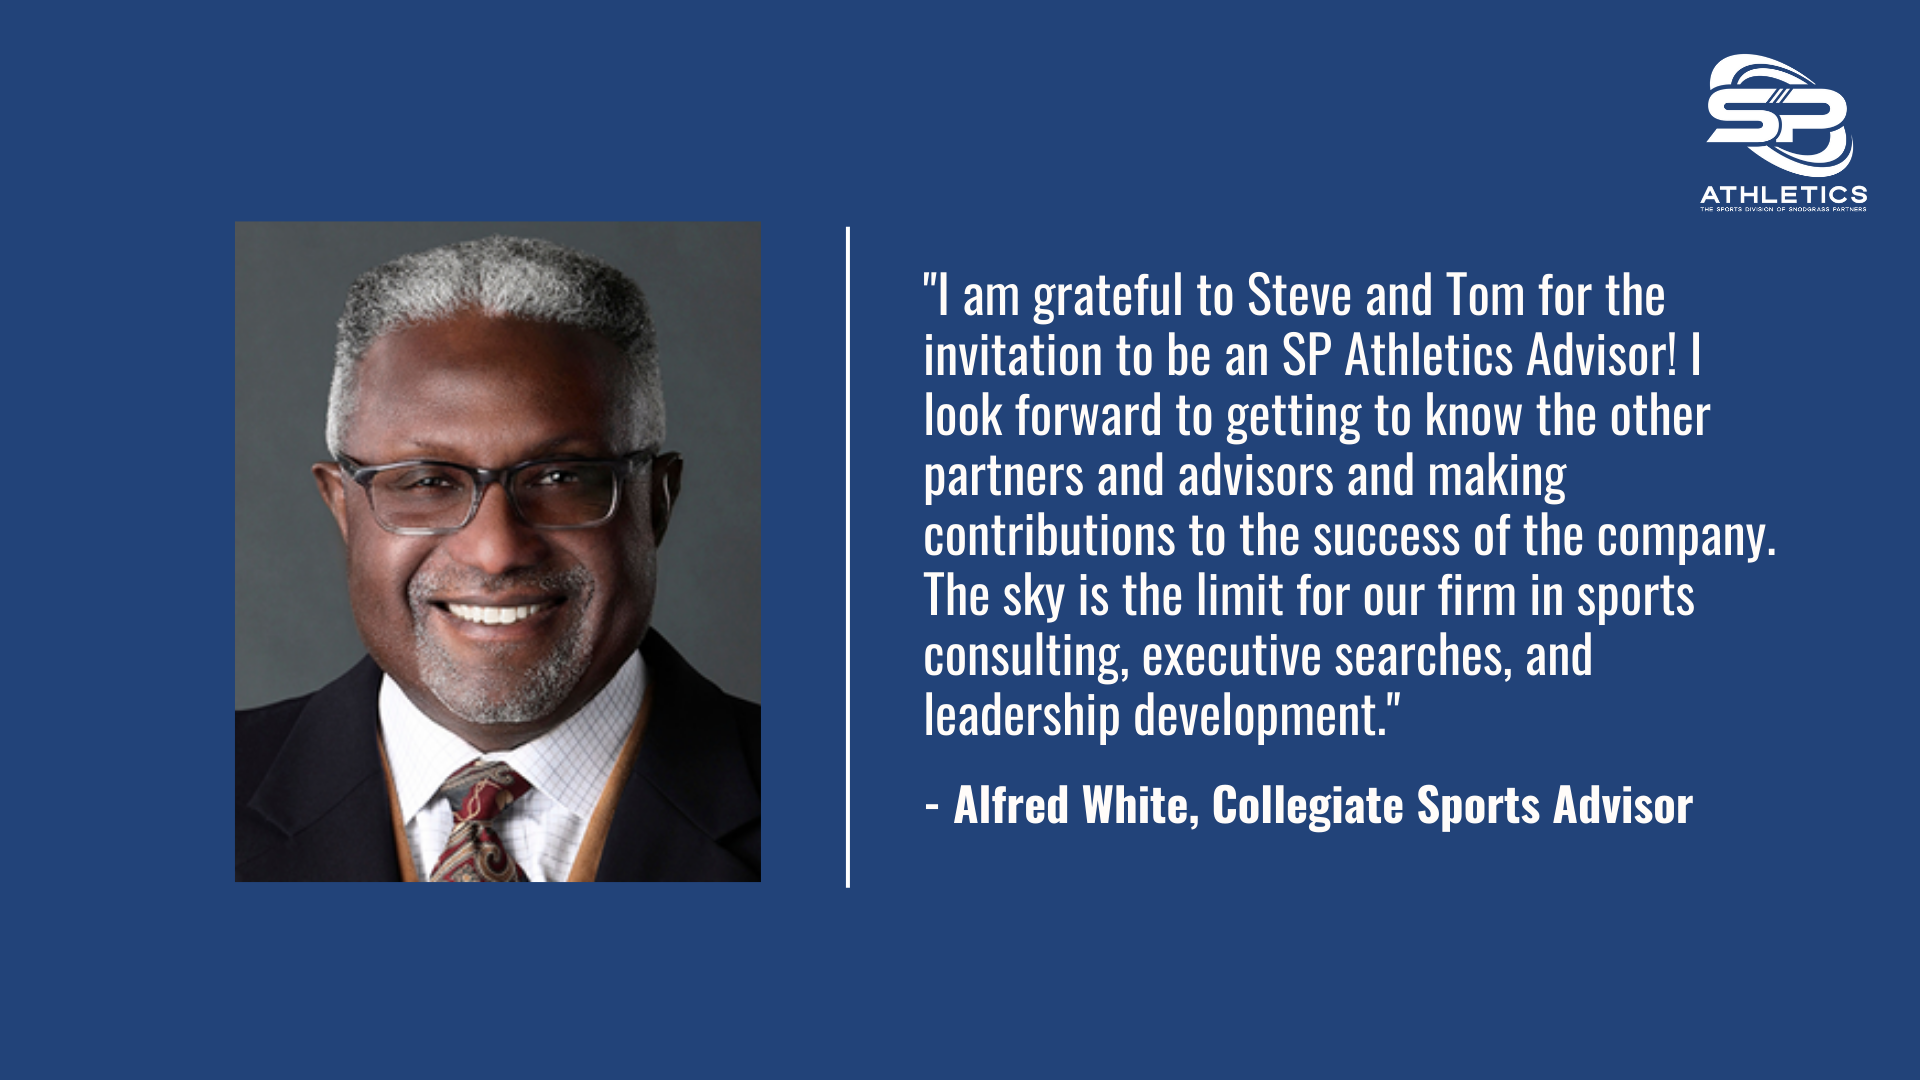 NEWS: Alfred White Joins SP Athletics as Collegiate Sports Advisor